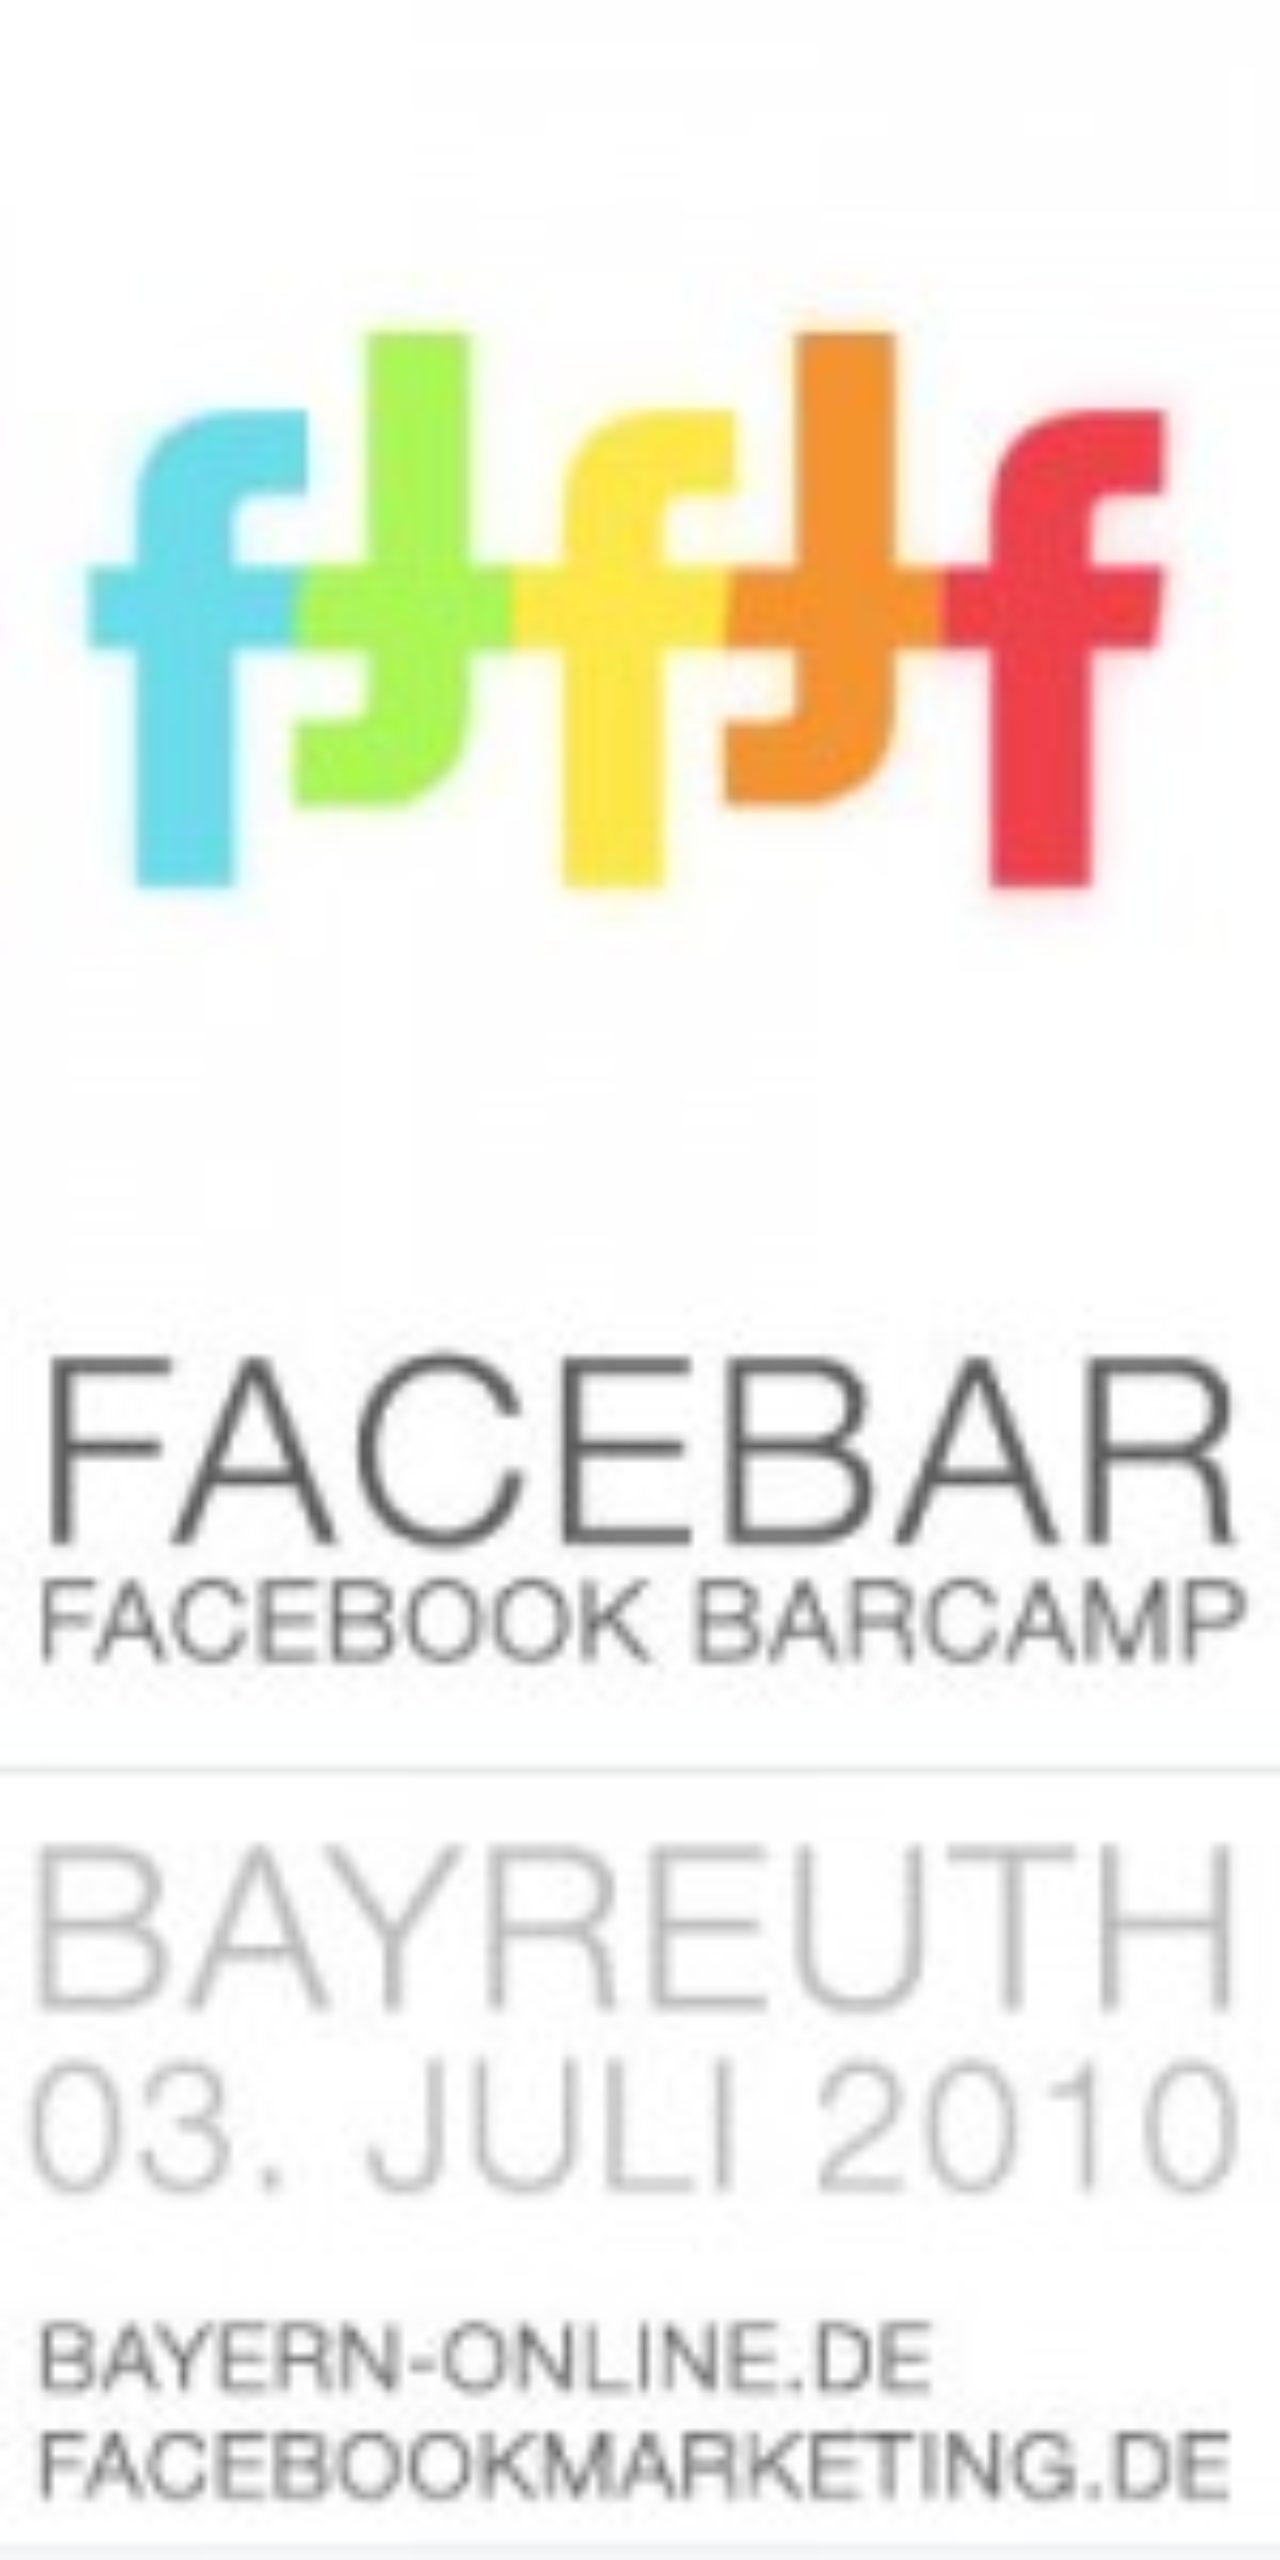 Facebook Barcamp Bayreuth